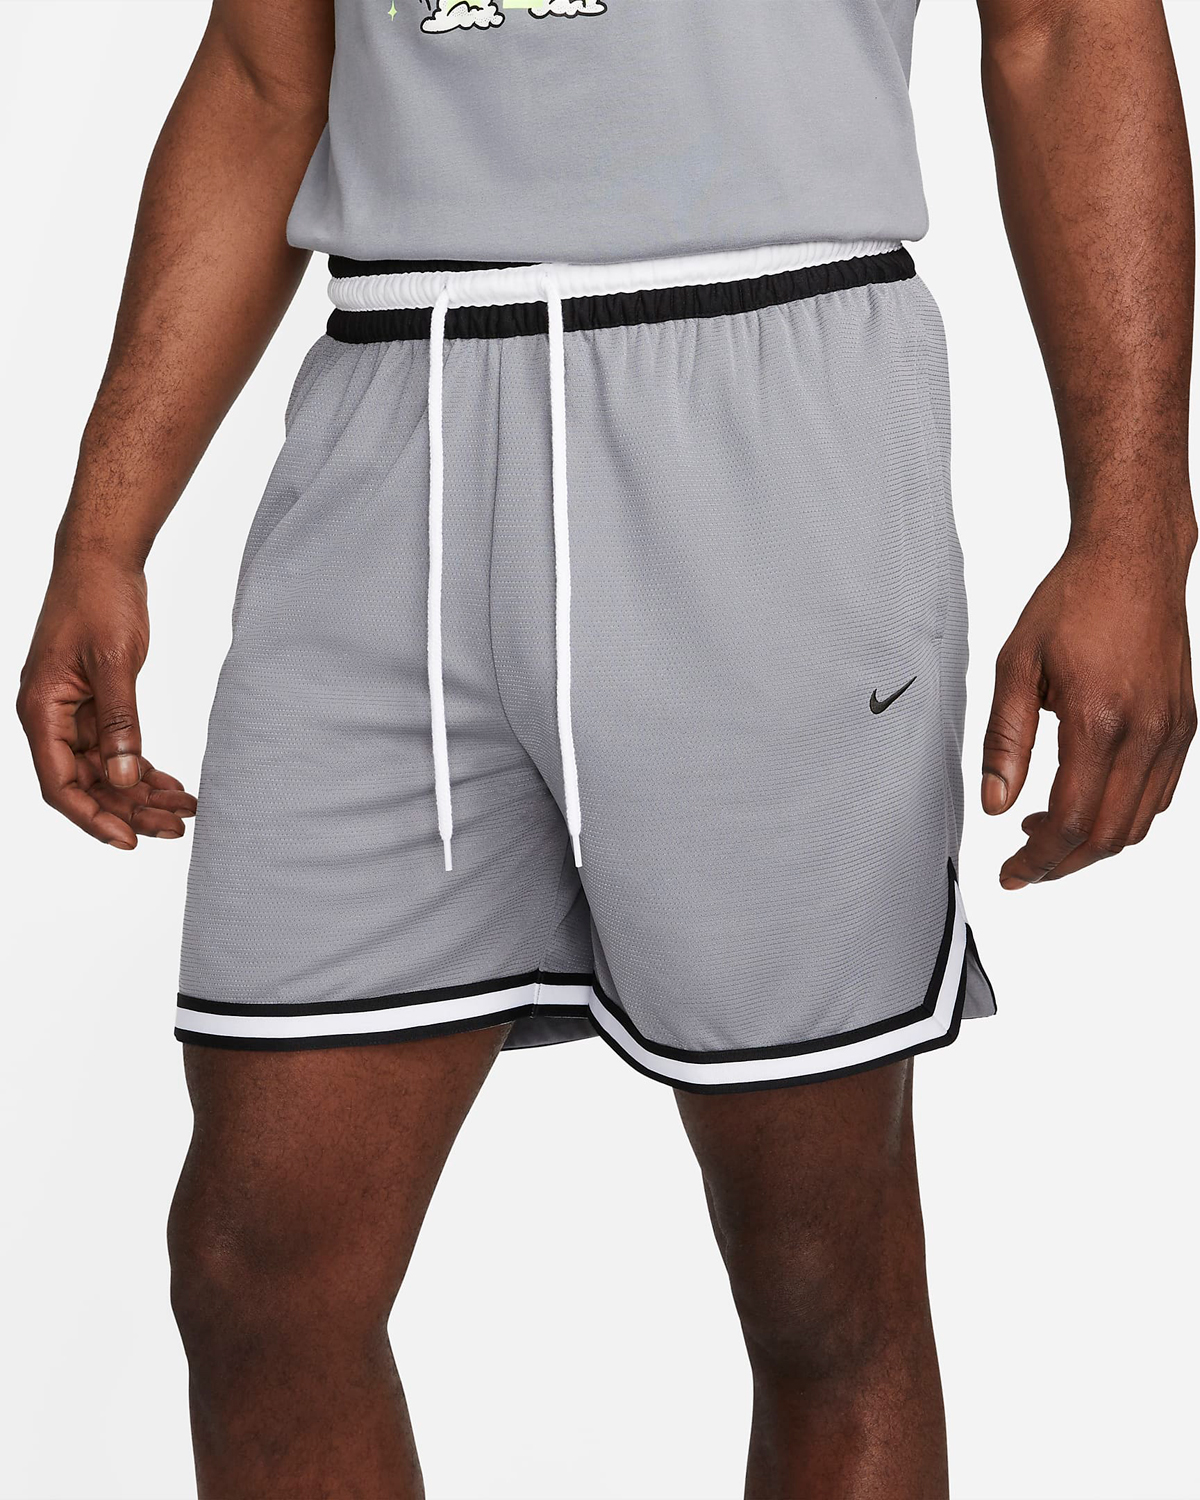 Nike-Dri-Fit-DNA-Basketball-Shorts-Cool-Grey